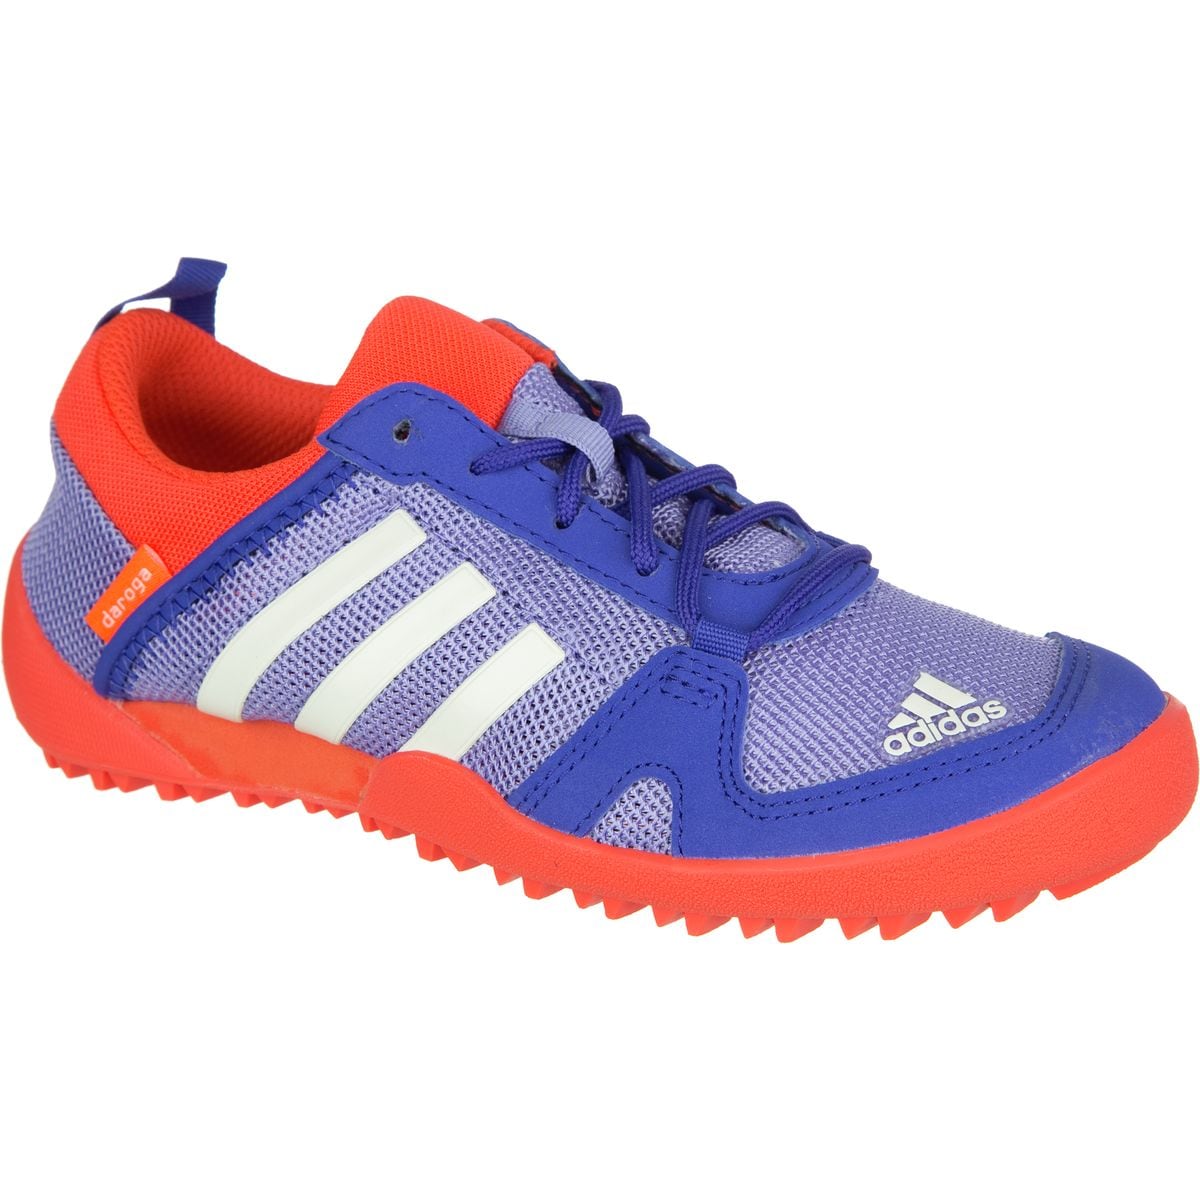 Adidas Outdoor Daroga Two Water Shoe - Kids' | eBay